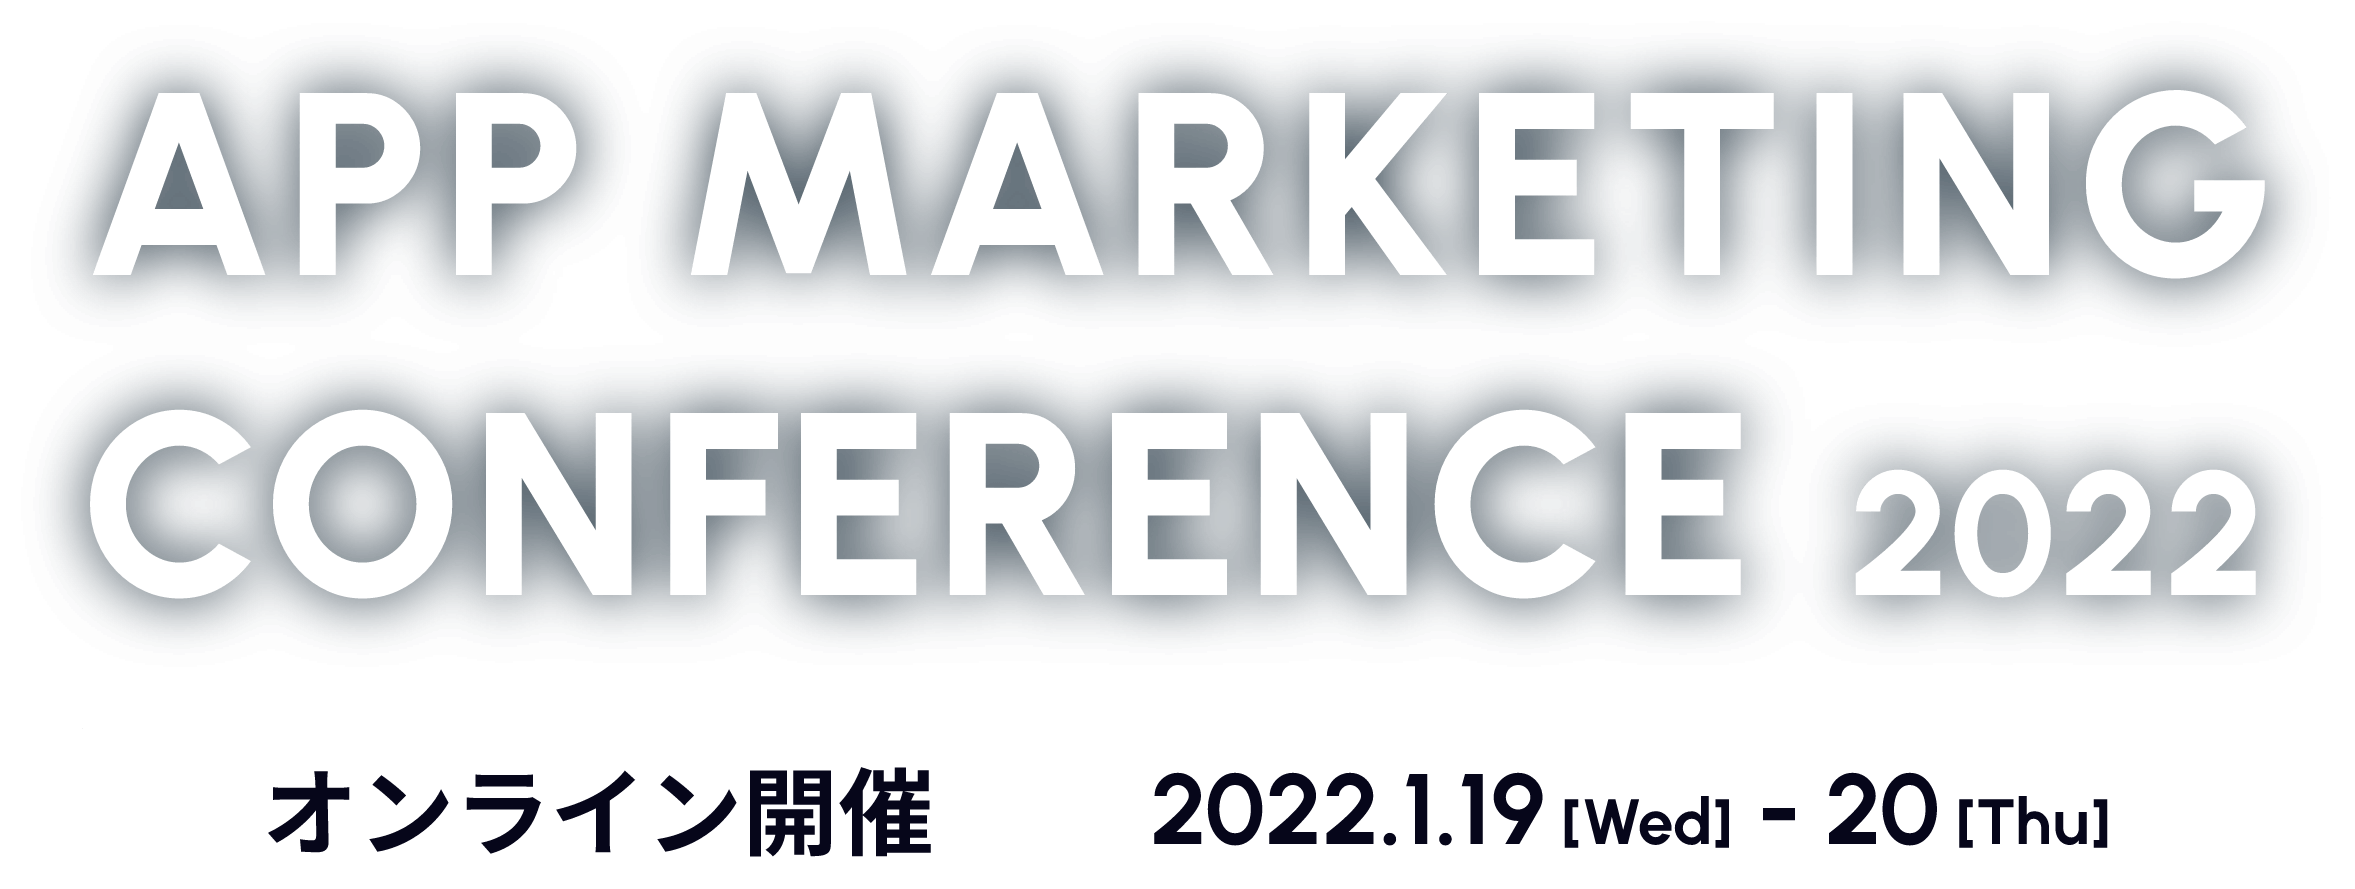 APP MARKETING CONFERENCE 2022 オンライン開催 2022.1.19[Wed]-20[Thu]